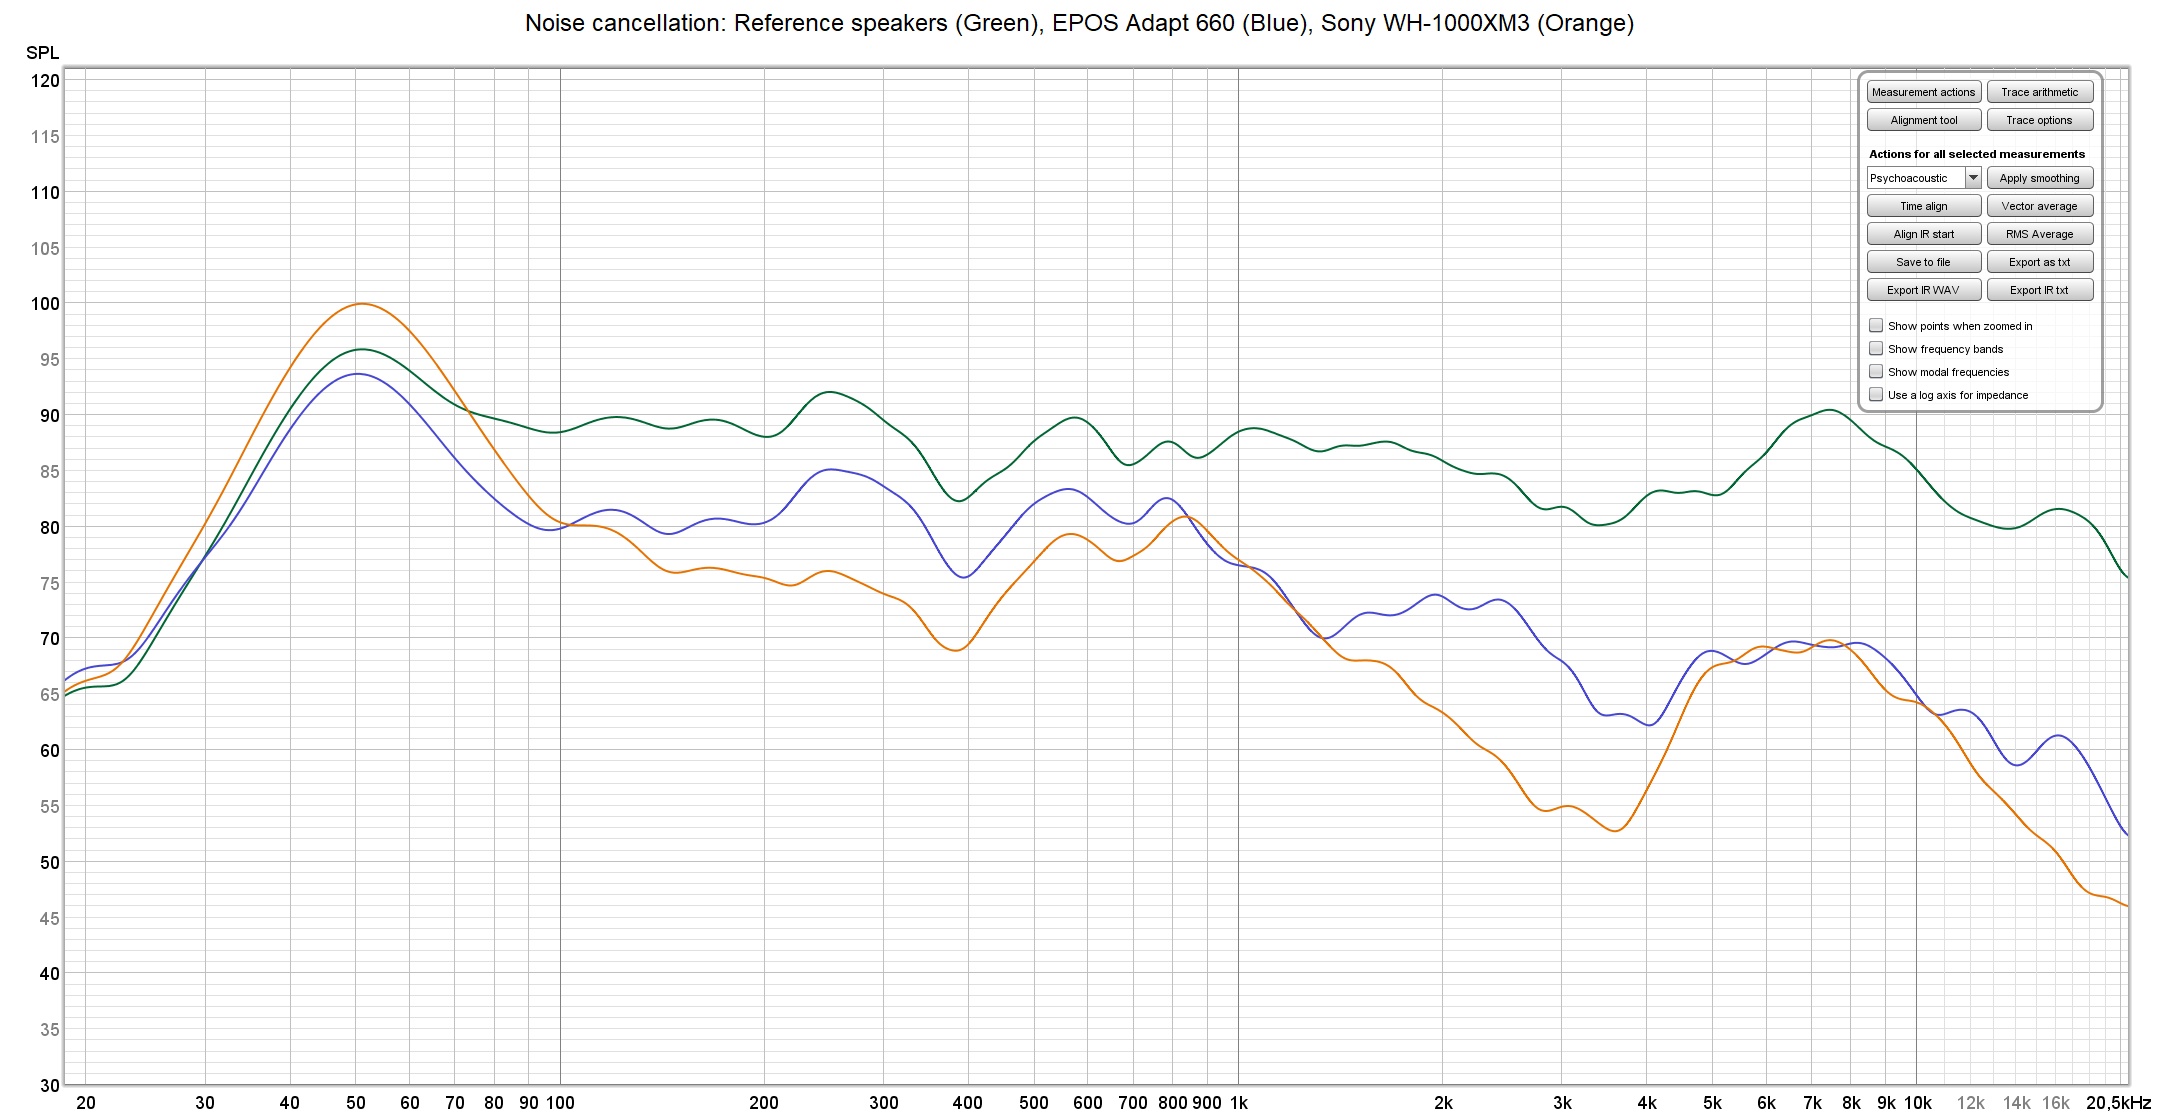 EPOS Adapt 660 vs Sony WH-1000XM3 noise cancelling